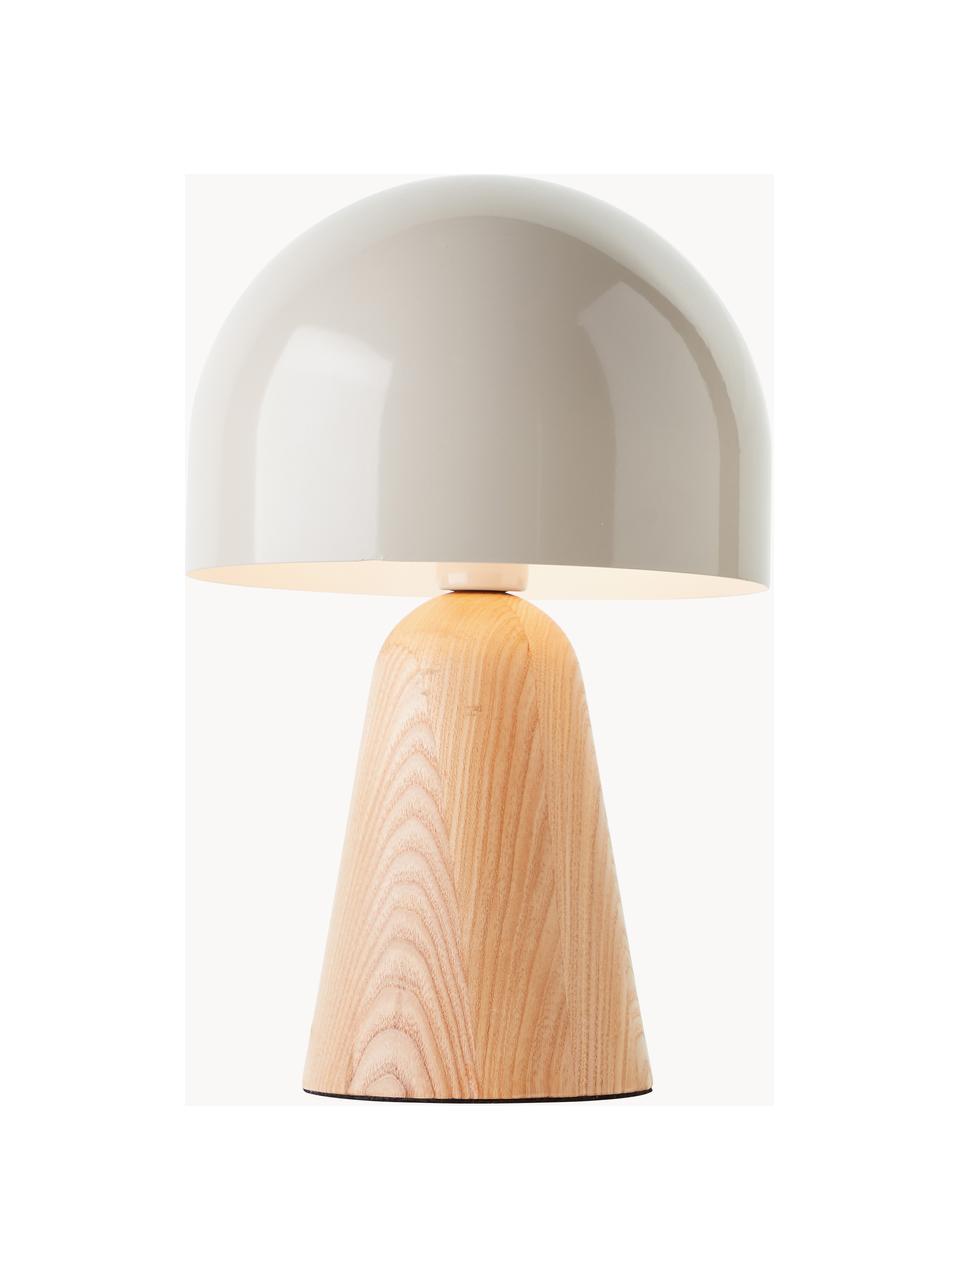 Kleine Tischlampe Nalam, Lampenschirm: Metall, beschichtet, Lampenfuß: Holz, Hellbeige, Helles Holz, Ø 20 x H 31 cm